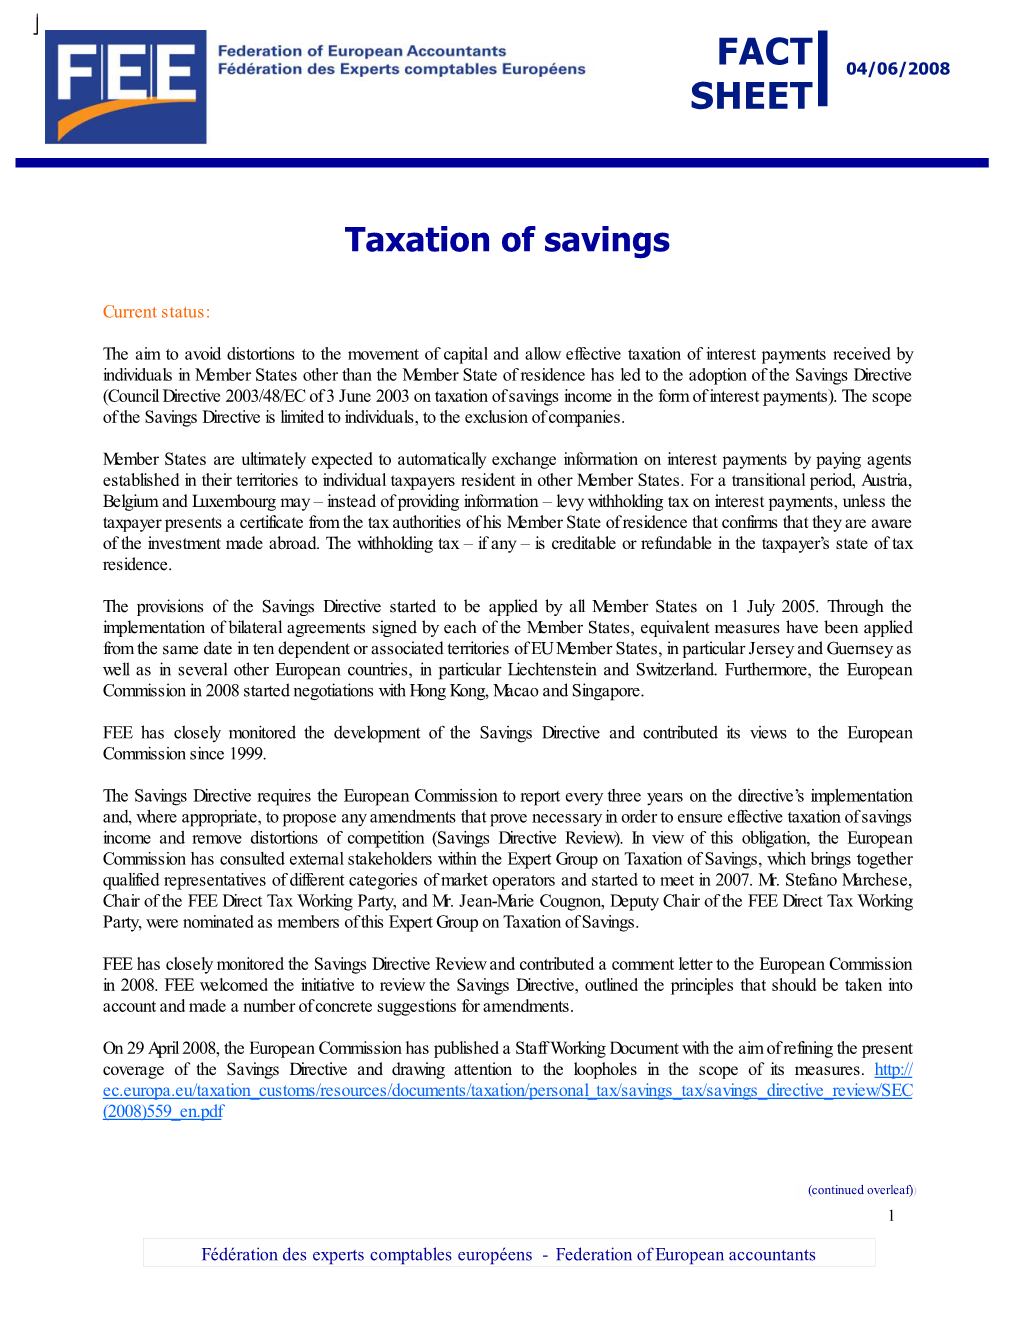 Savings Directive Review)